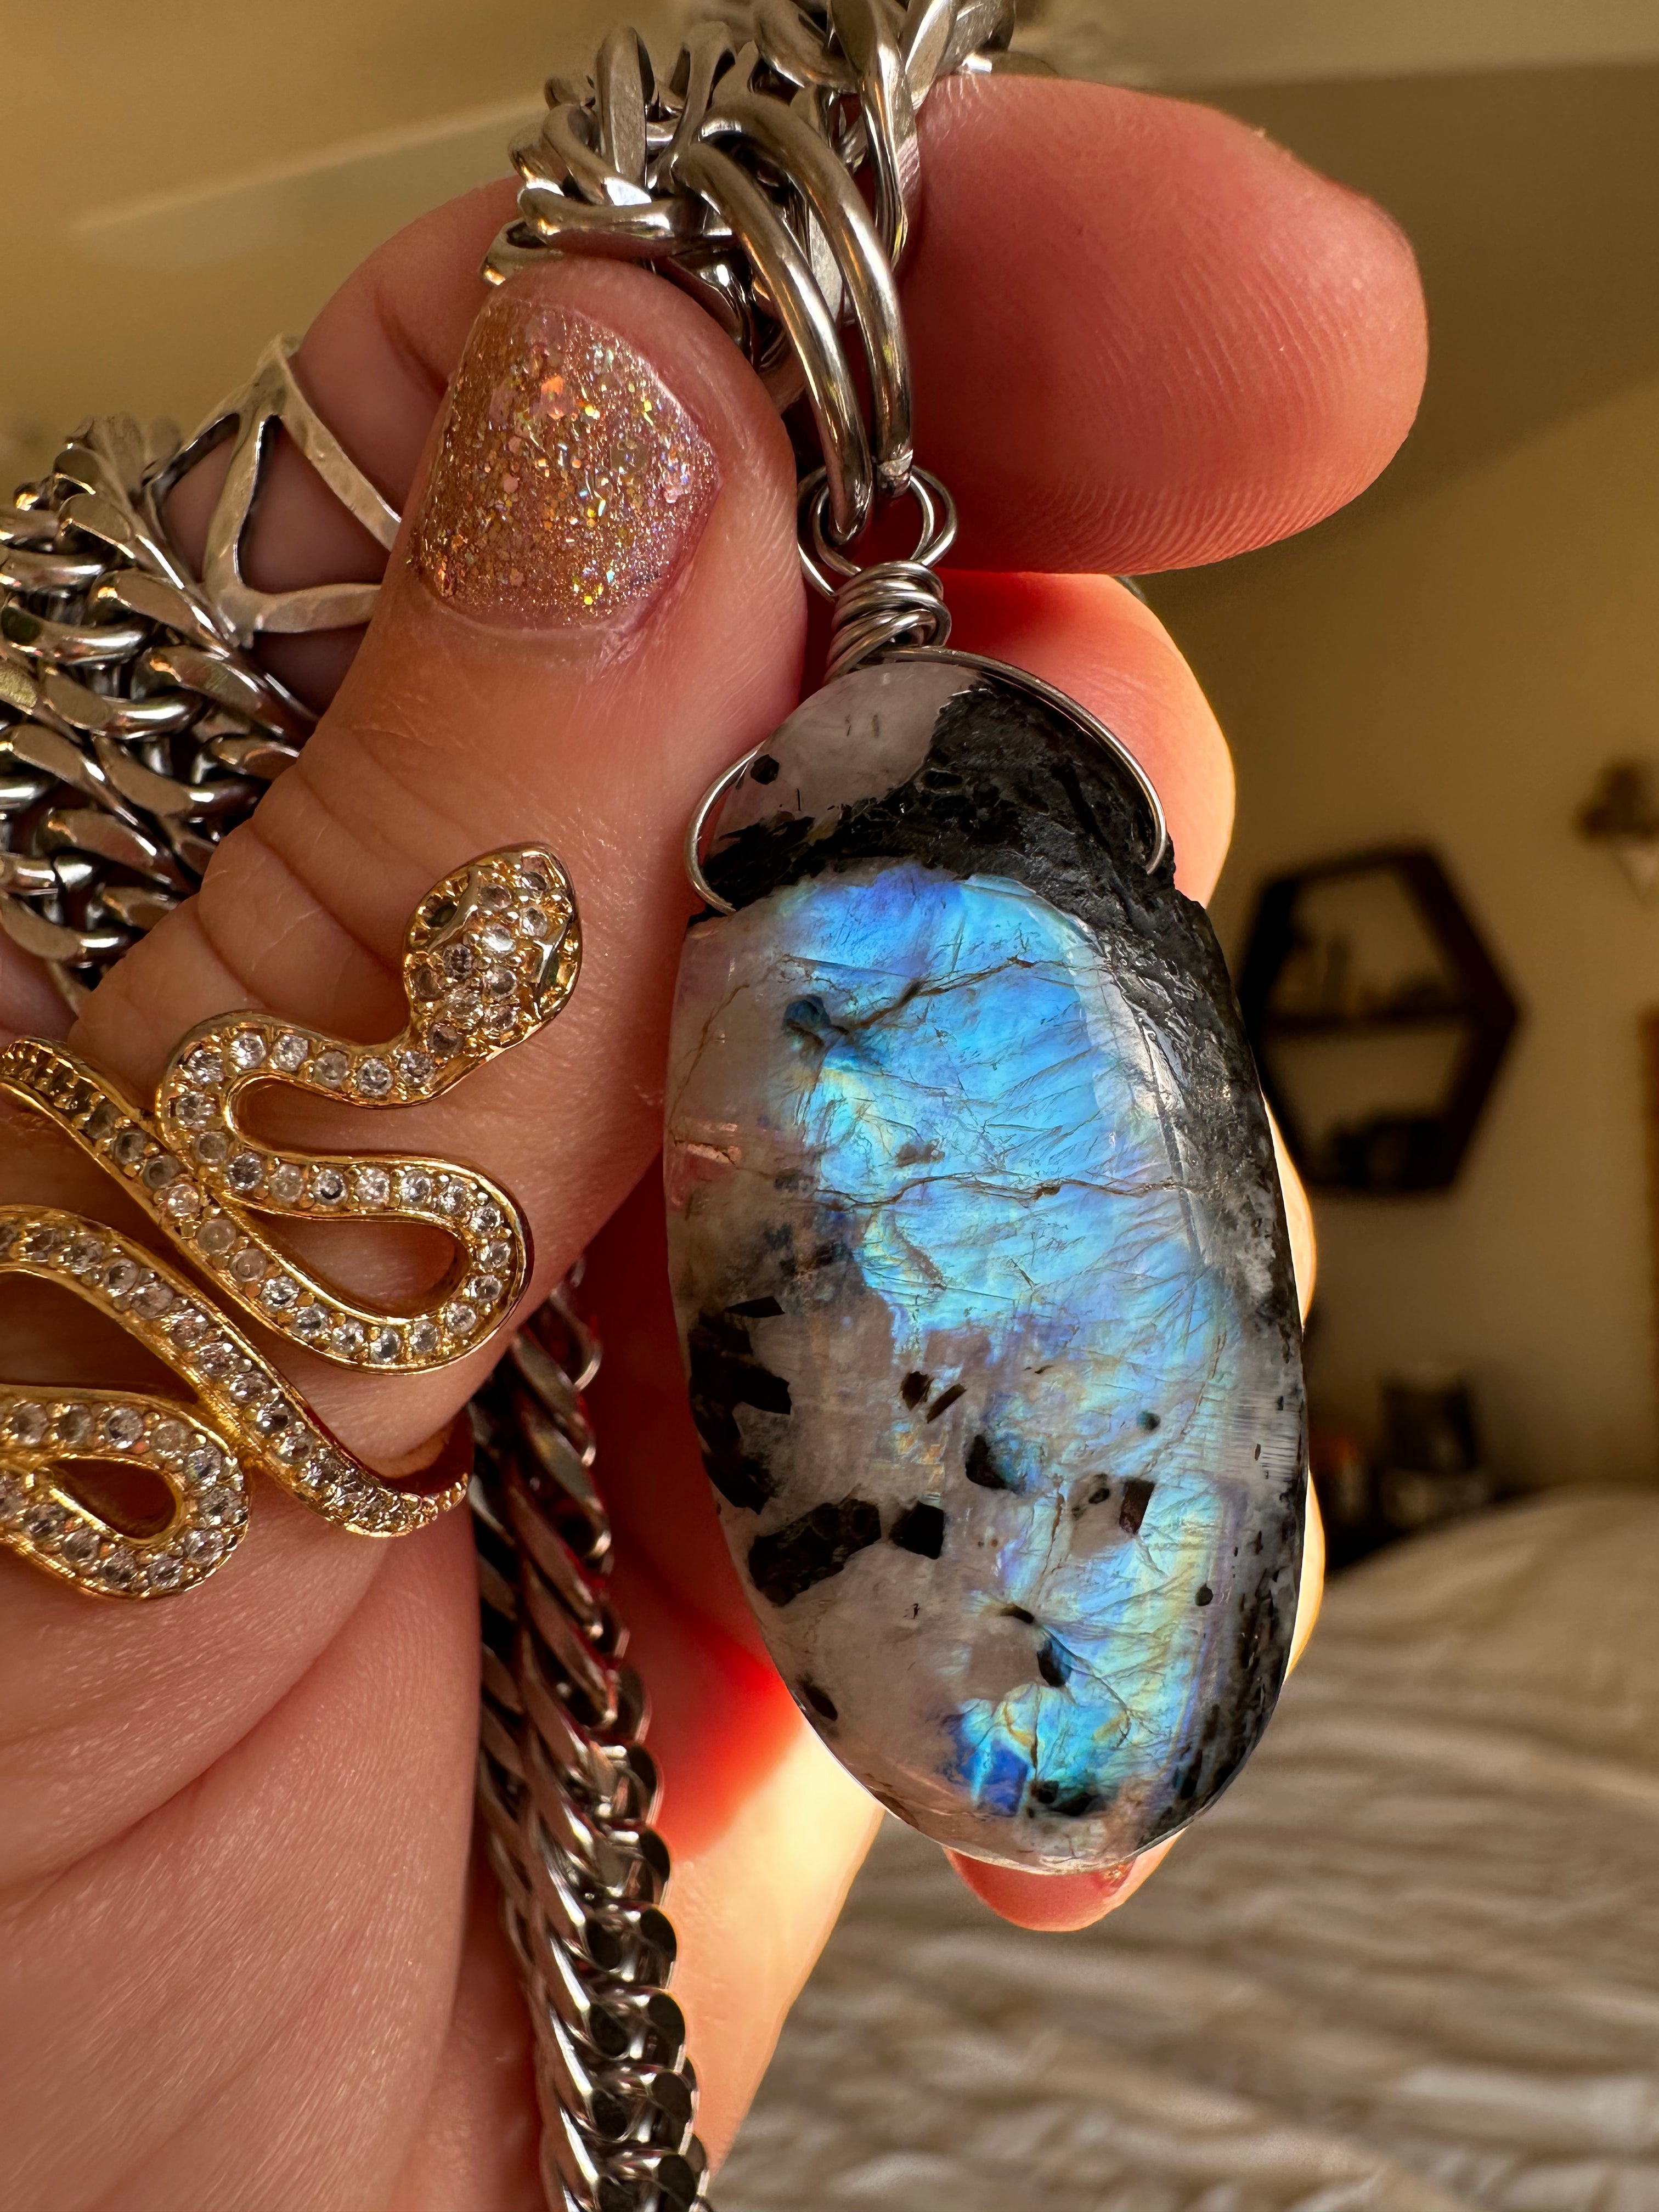 sacred rocker rock necklace (blue) – olivia moray